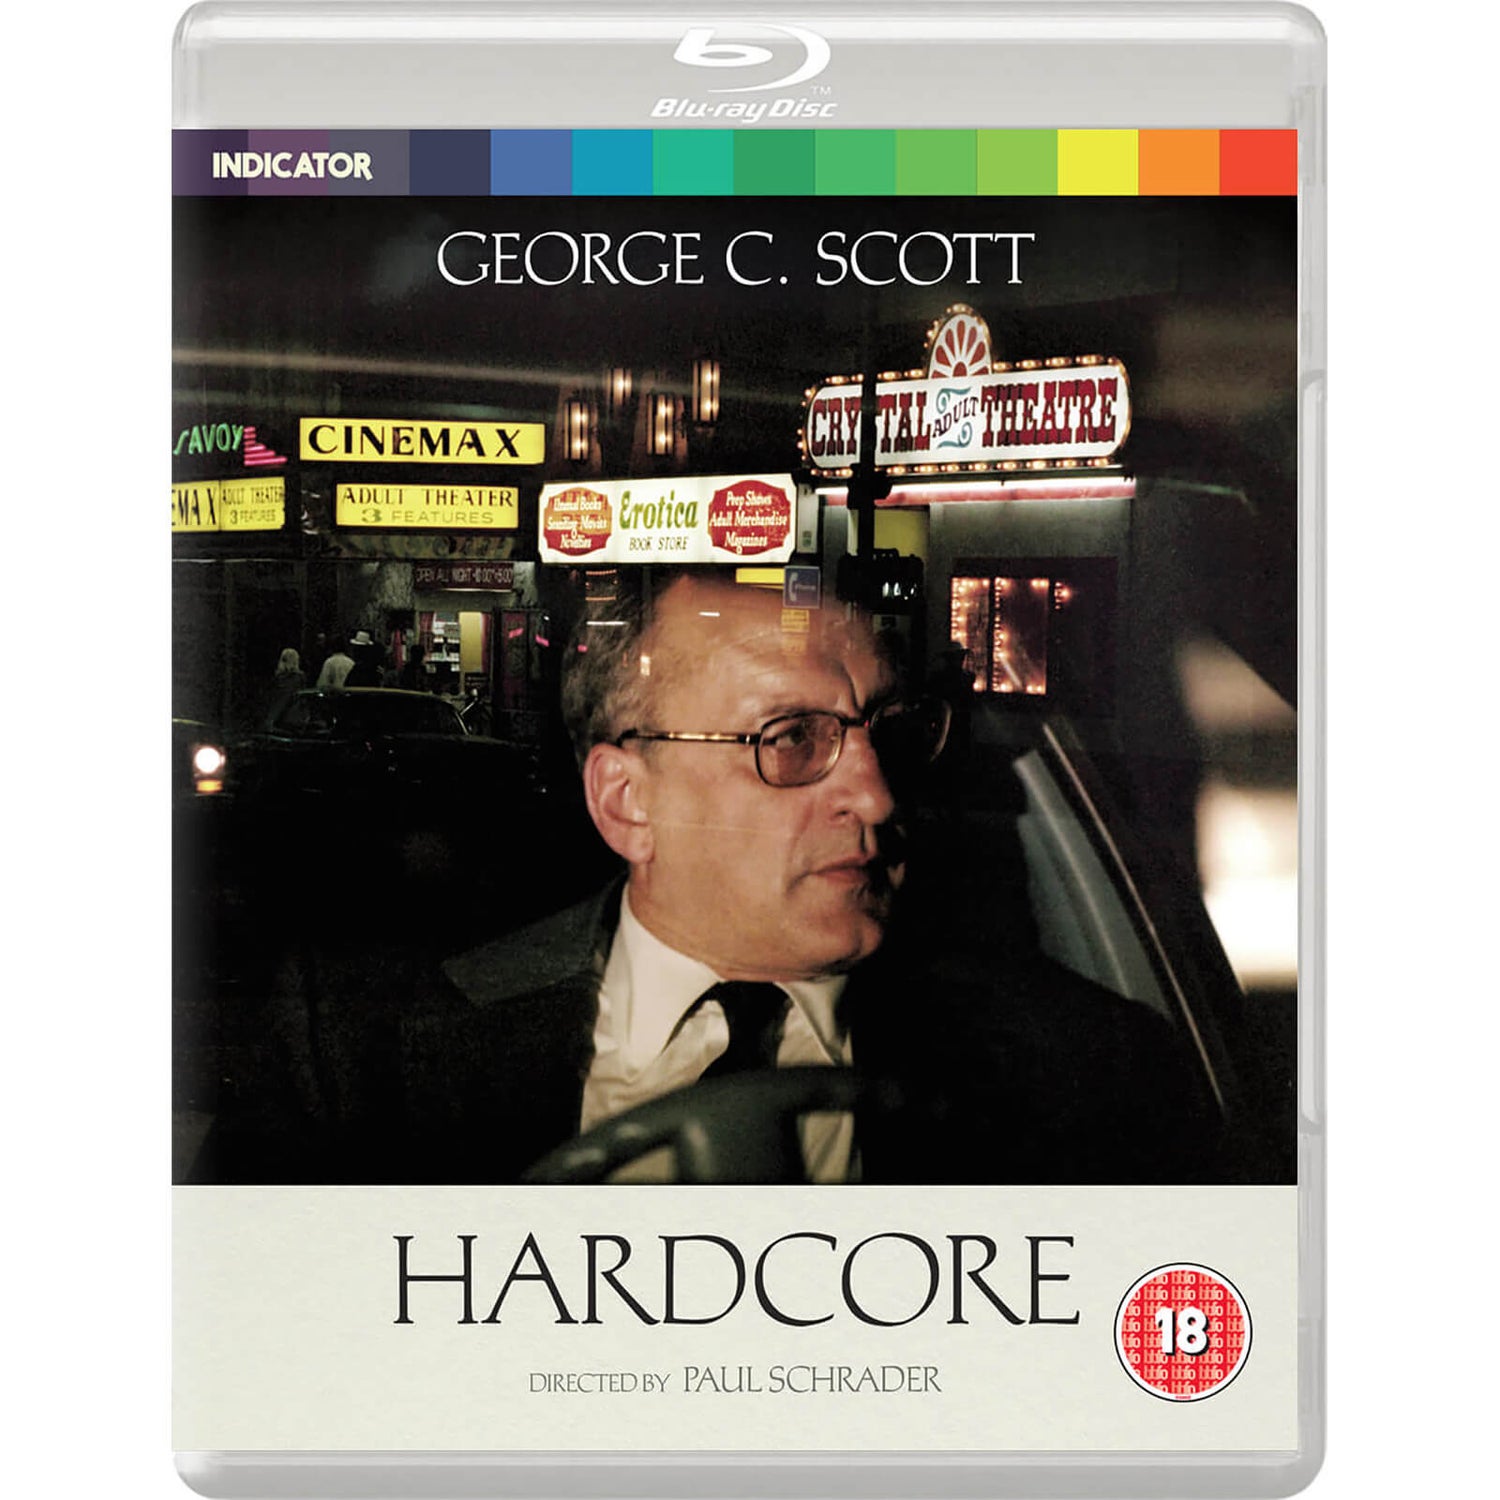 Hardcore Blu-ray picture